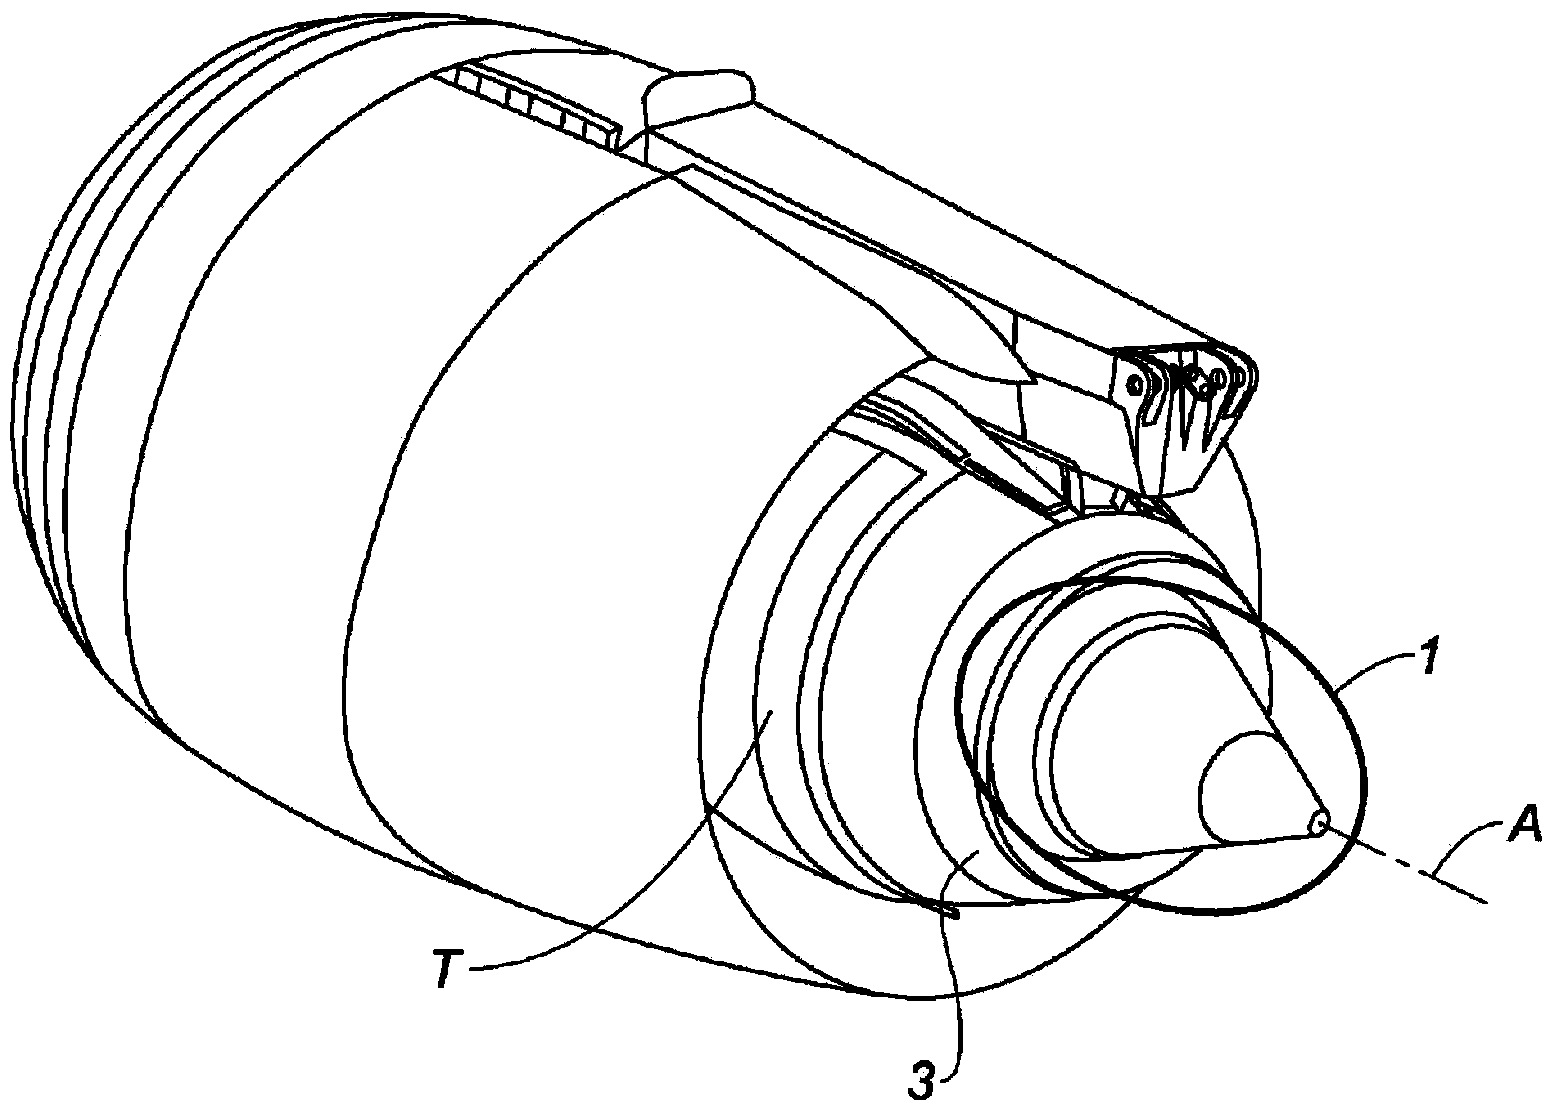 Aircraft turbojet engine exhaust cone